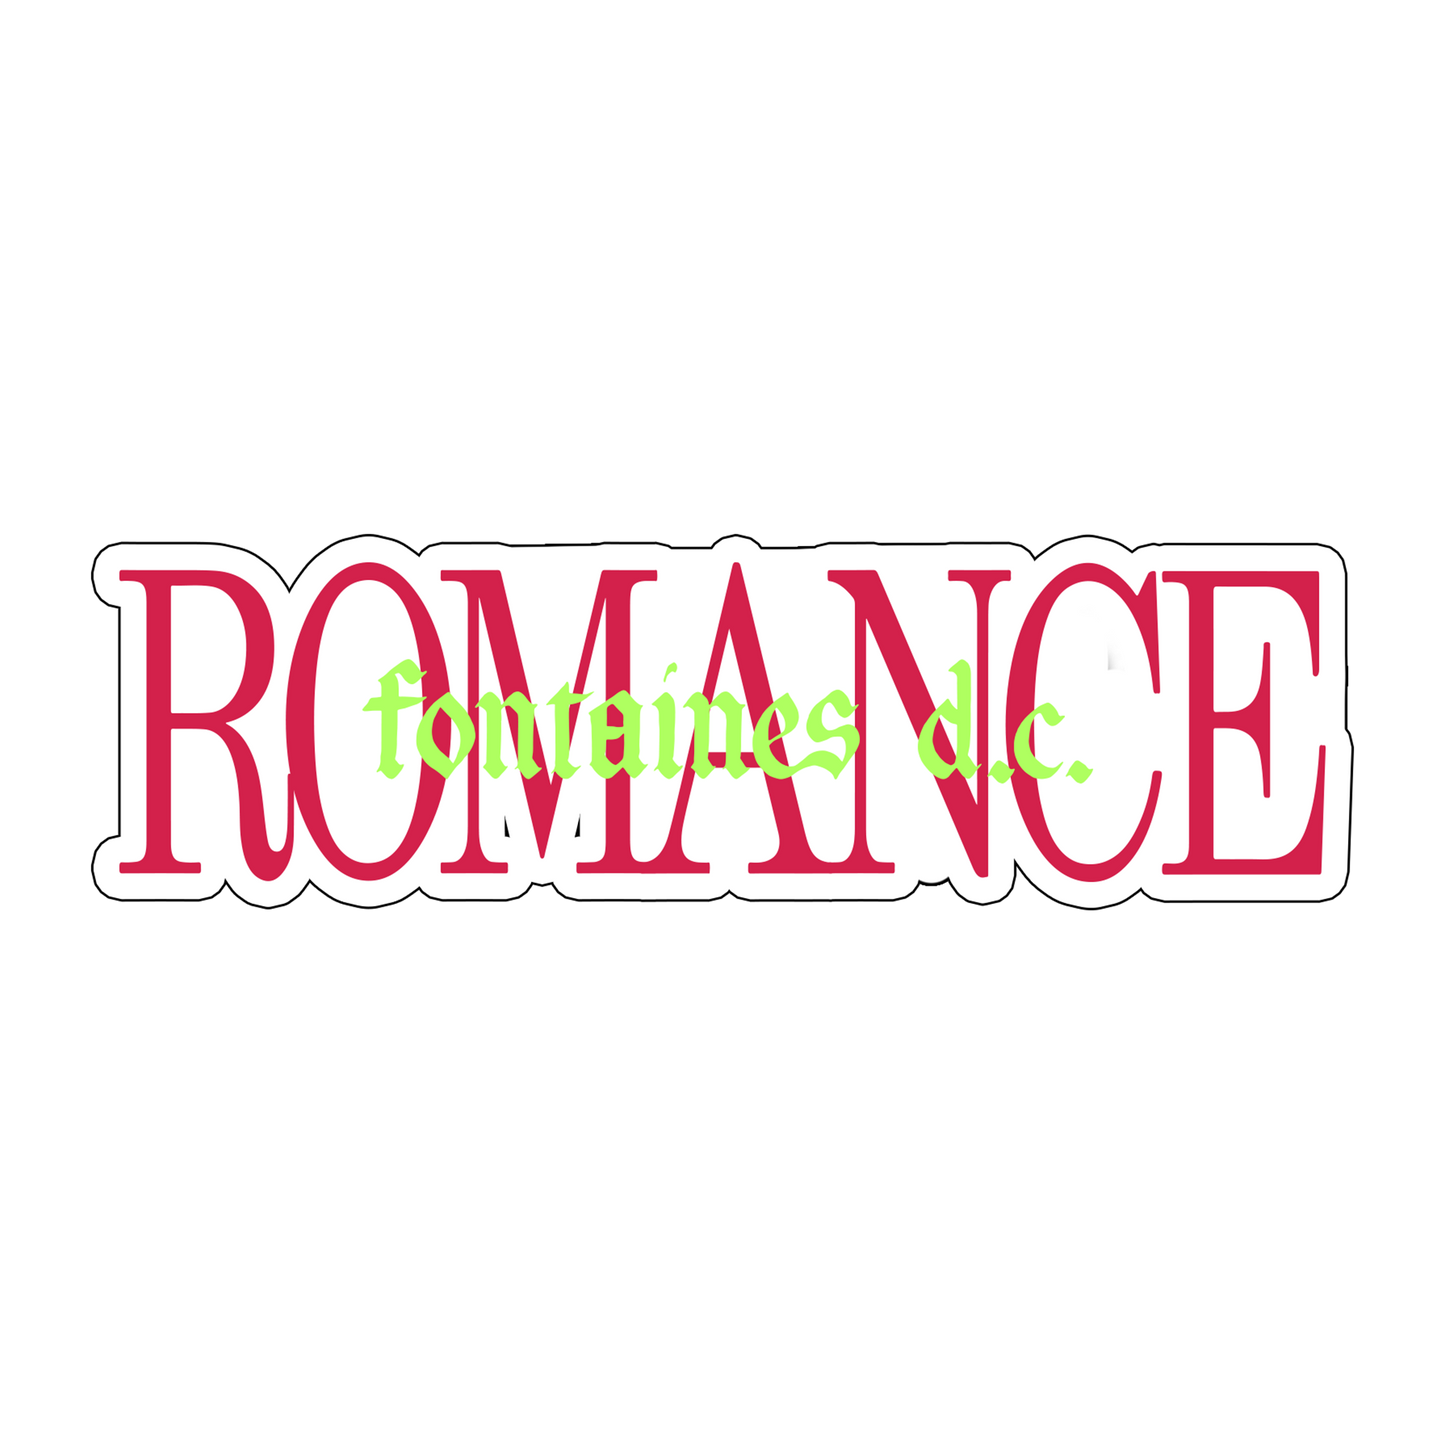 Romance Sticker Set